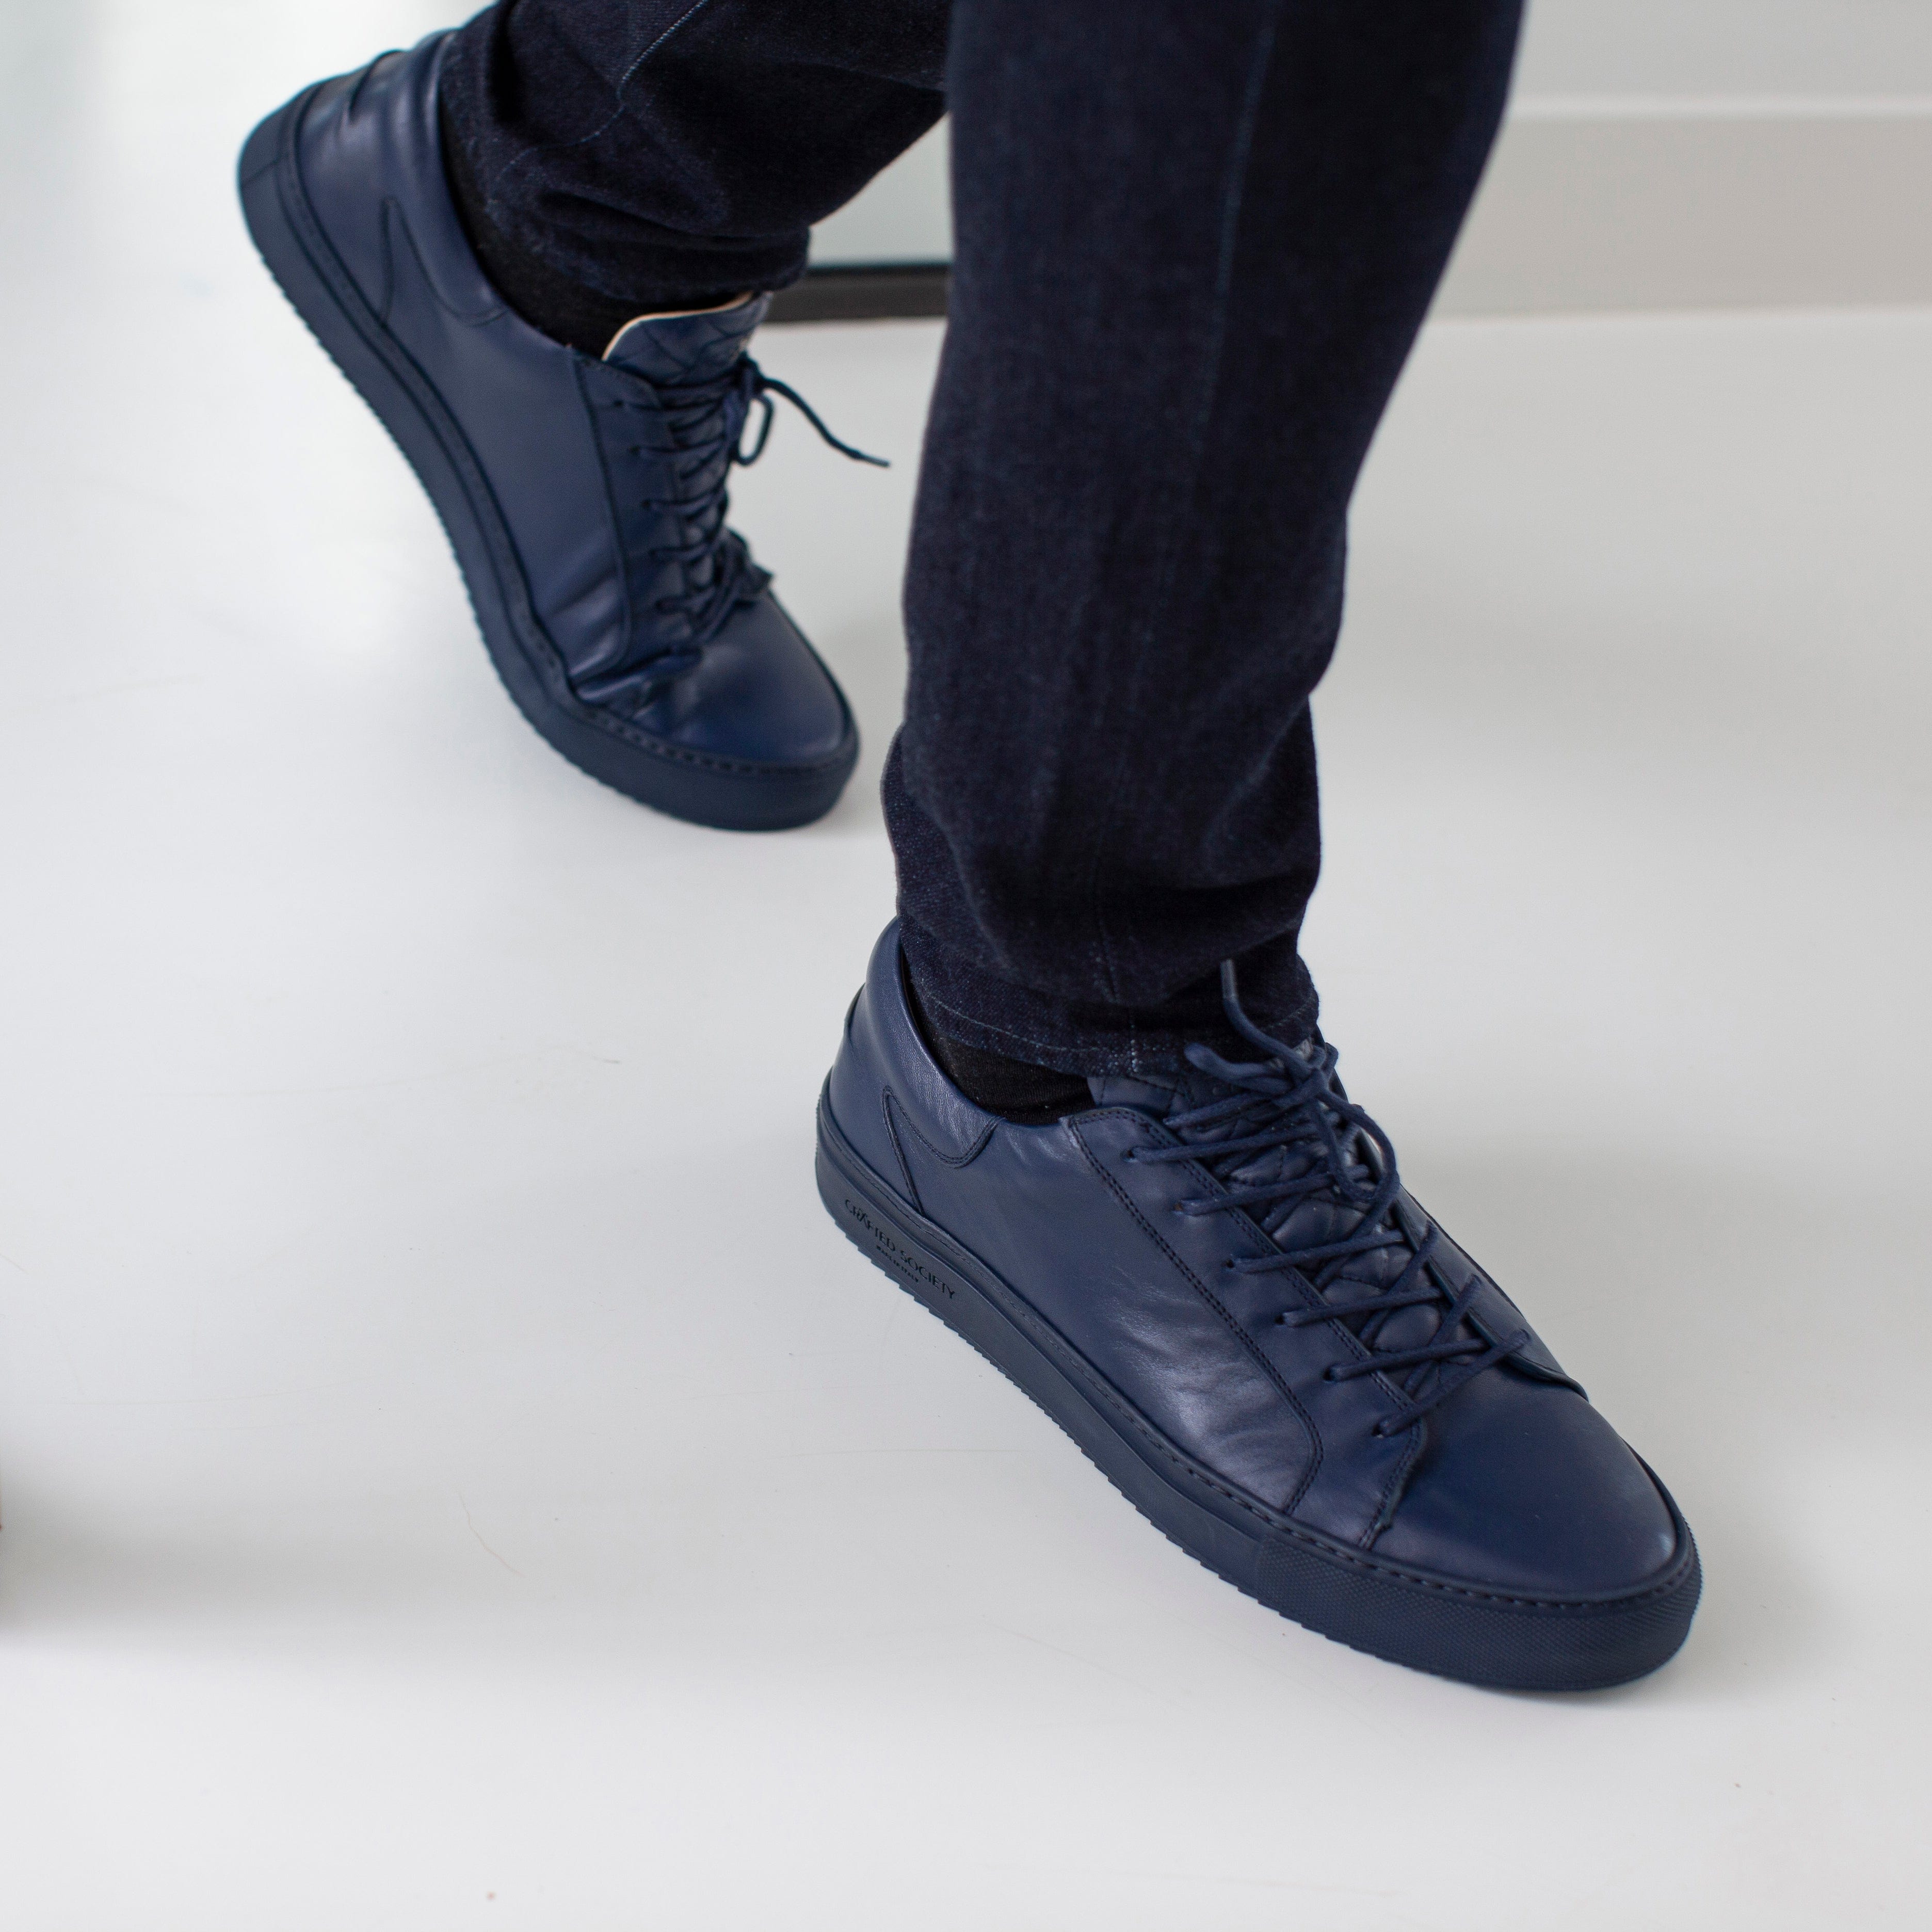 Mario Low Refined Luxury Sneaker - Navy Full Grain Leather / Navy Outsole